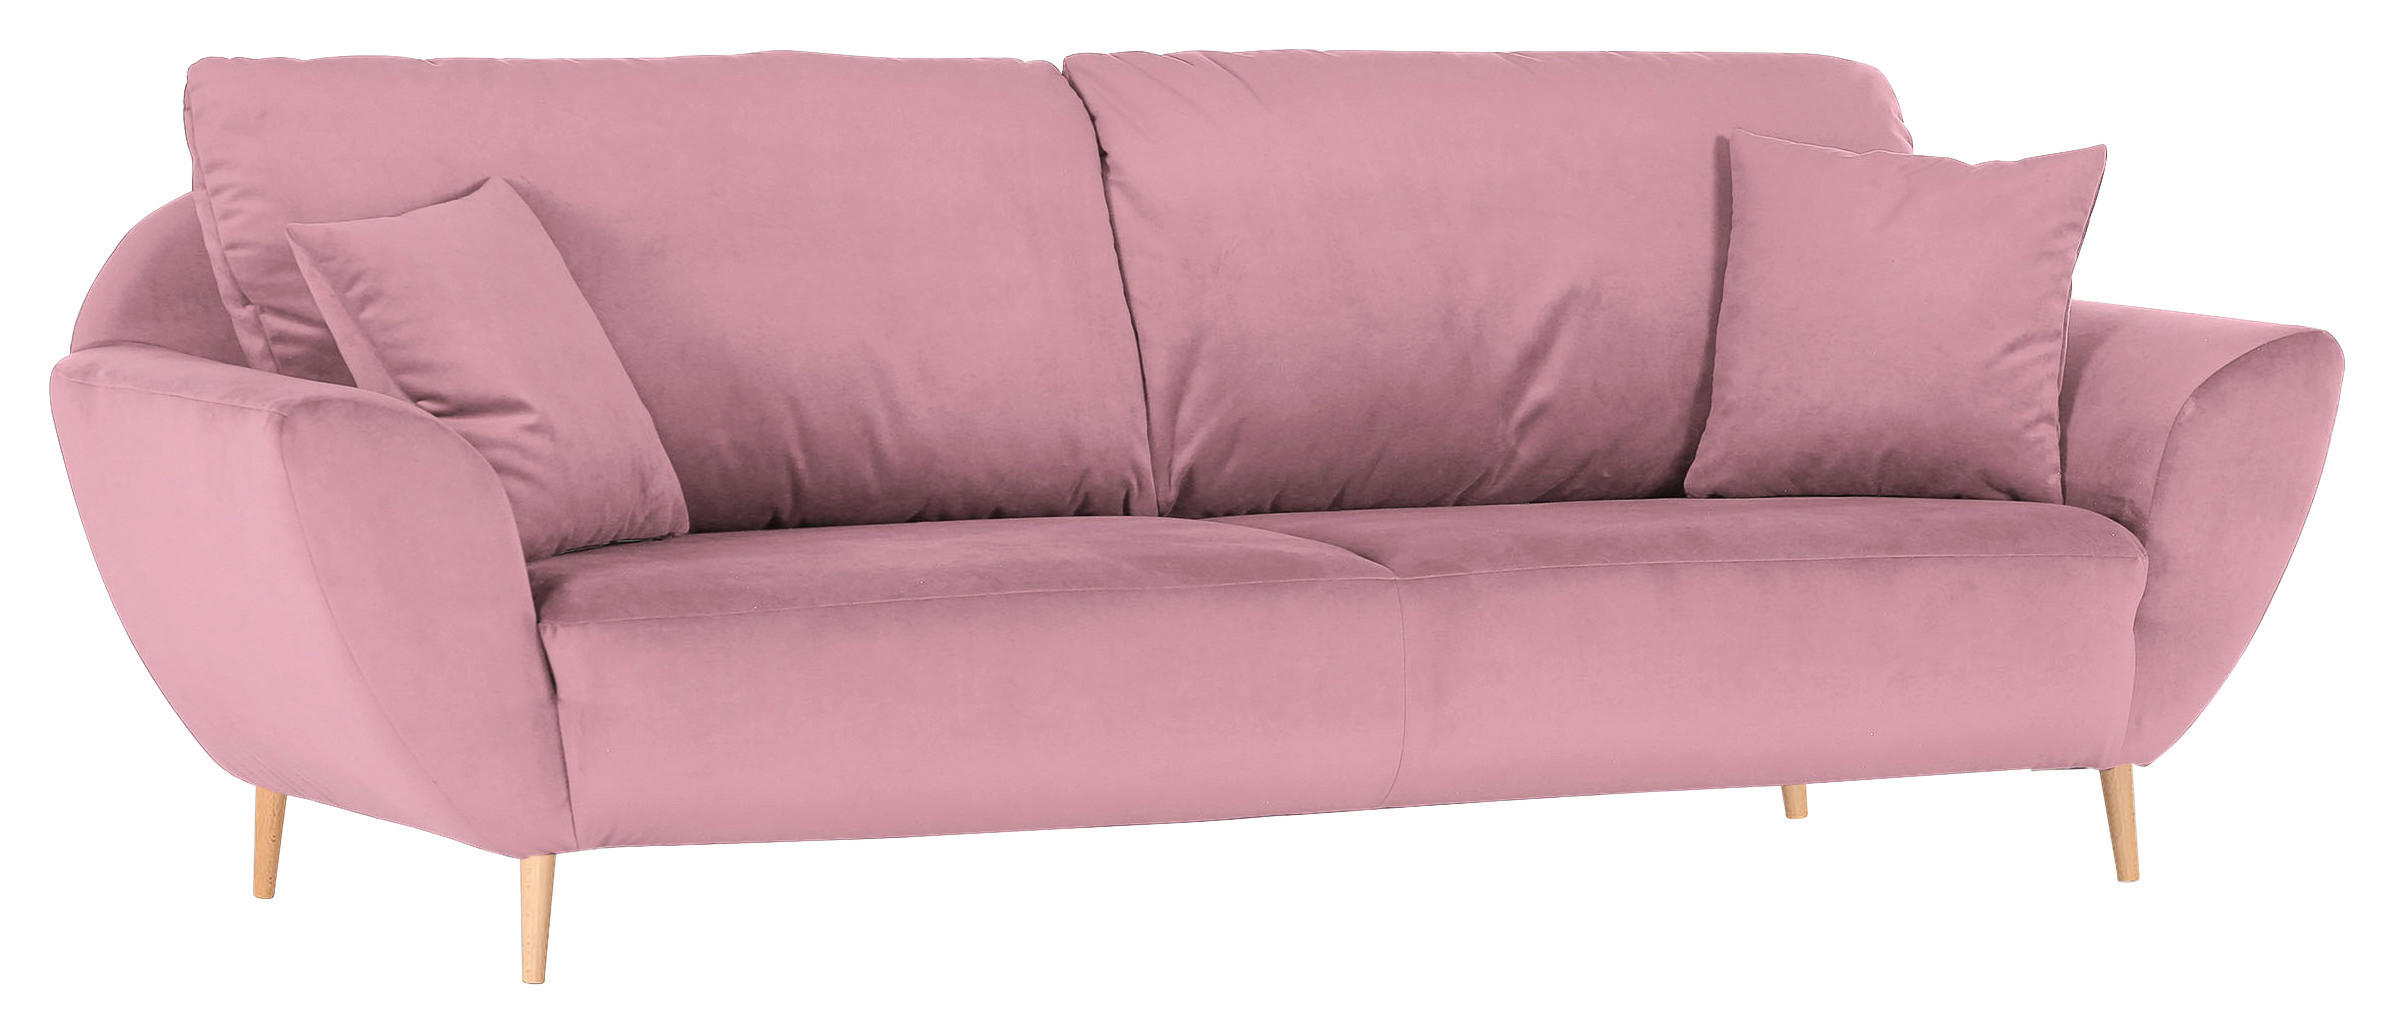 Sofa in Rosa mit Kissen heute bestellen